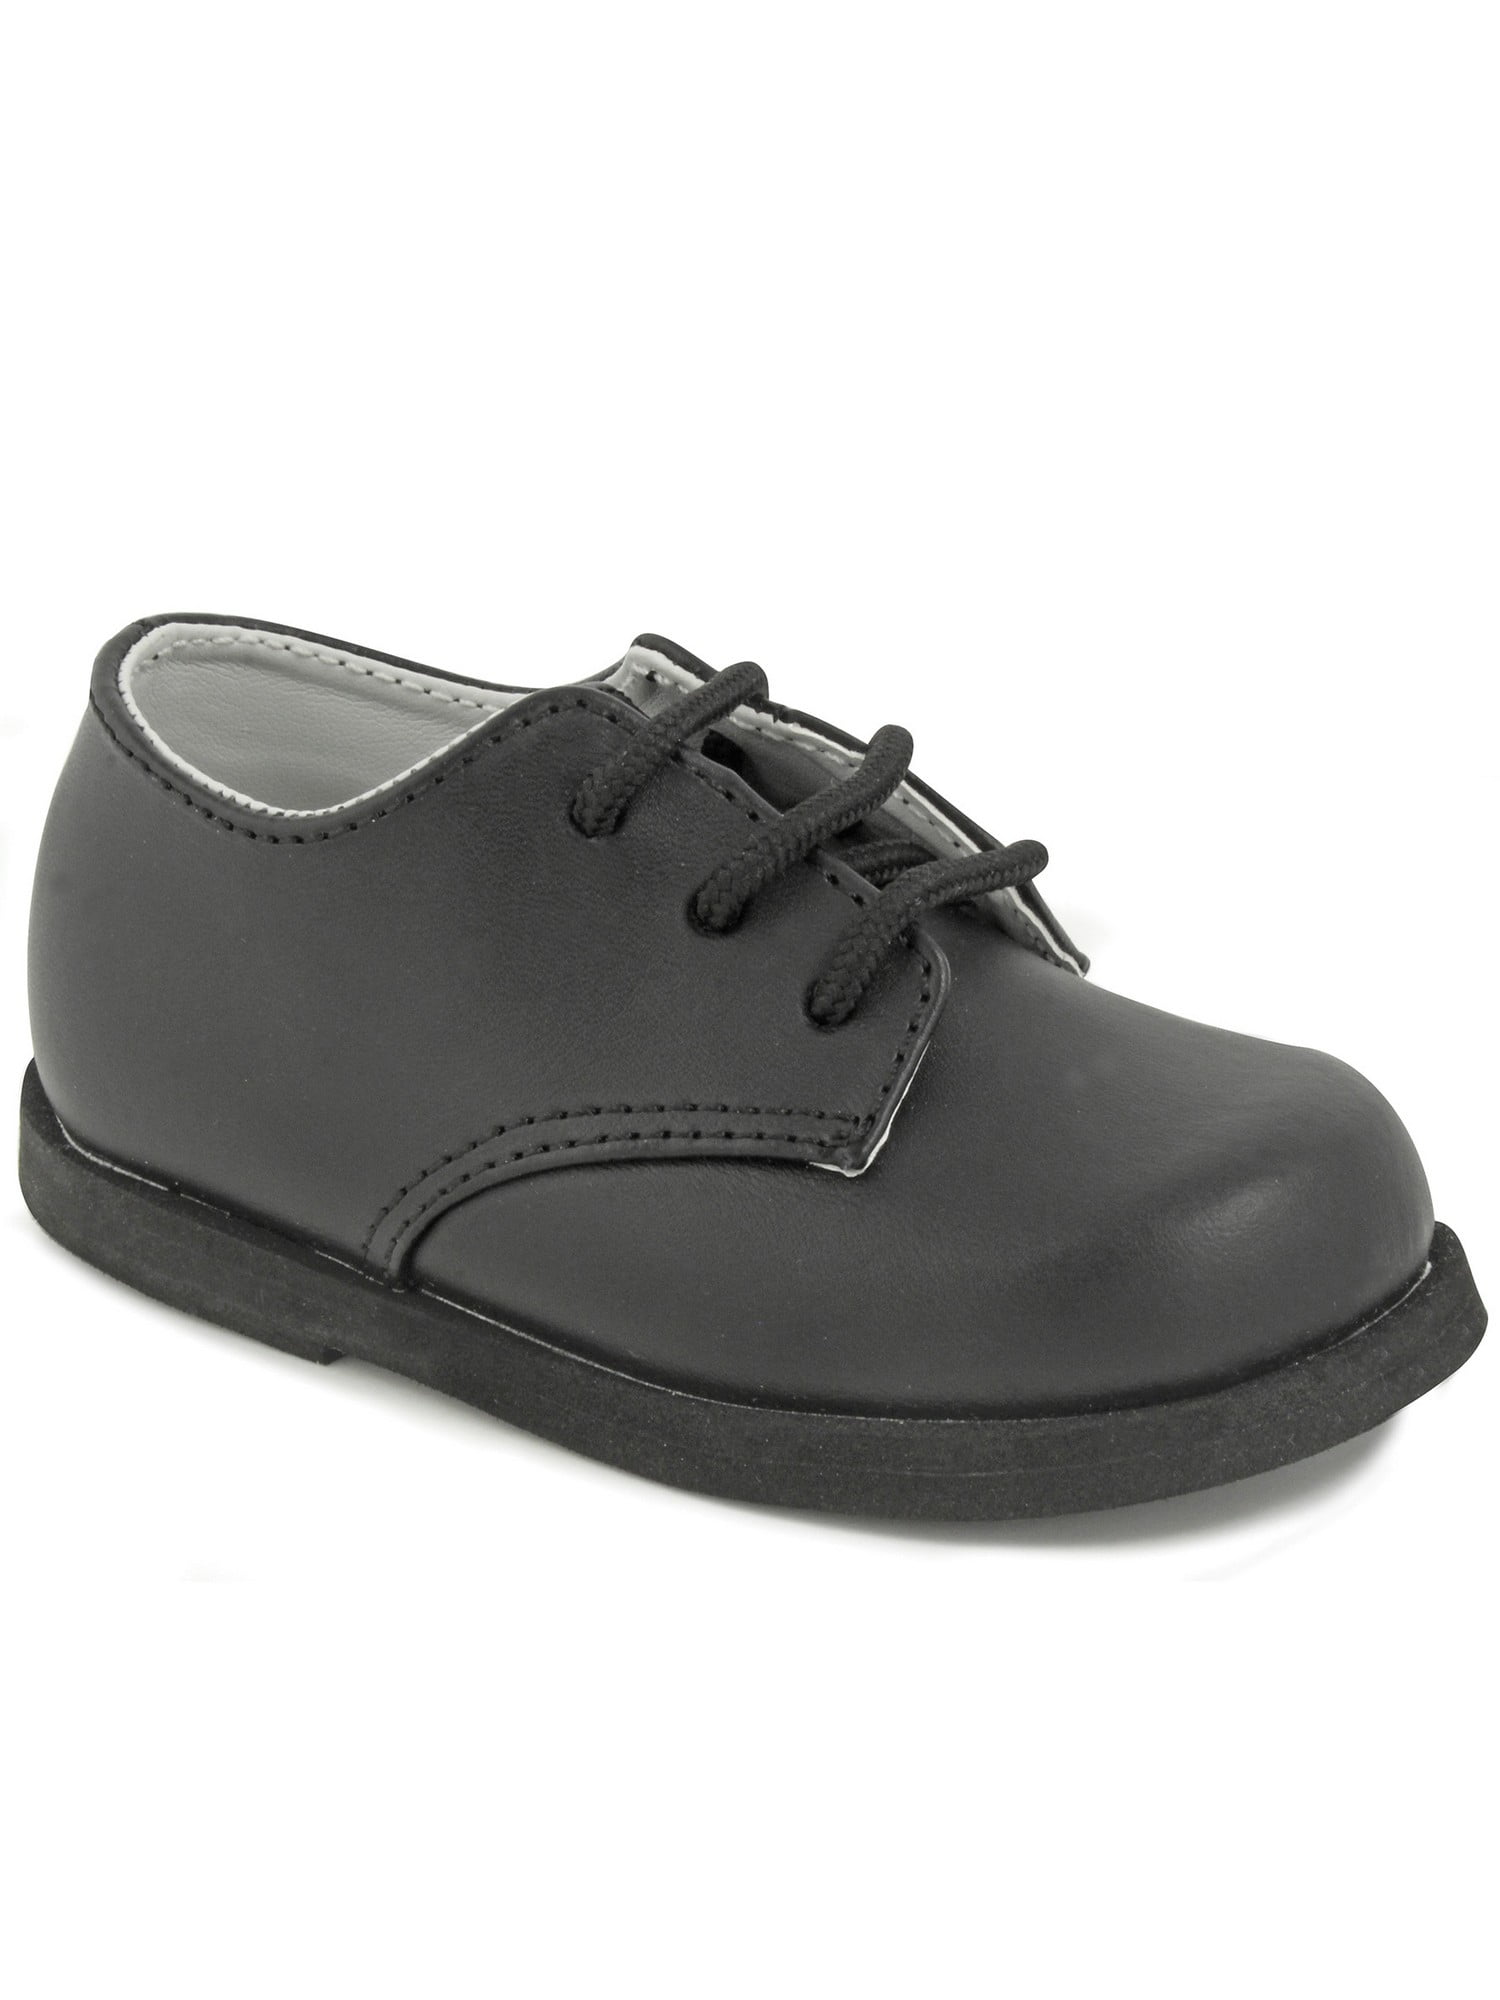 boys black oxford shoes